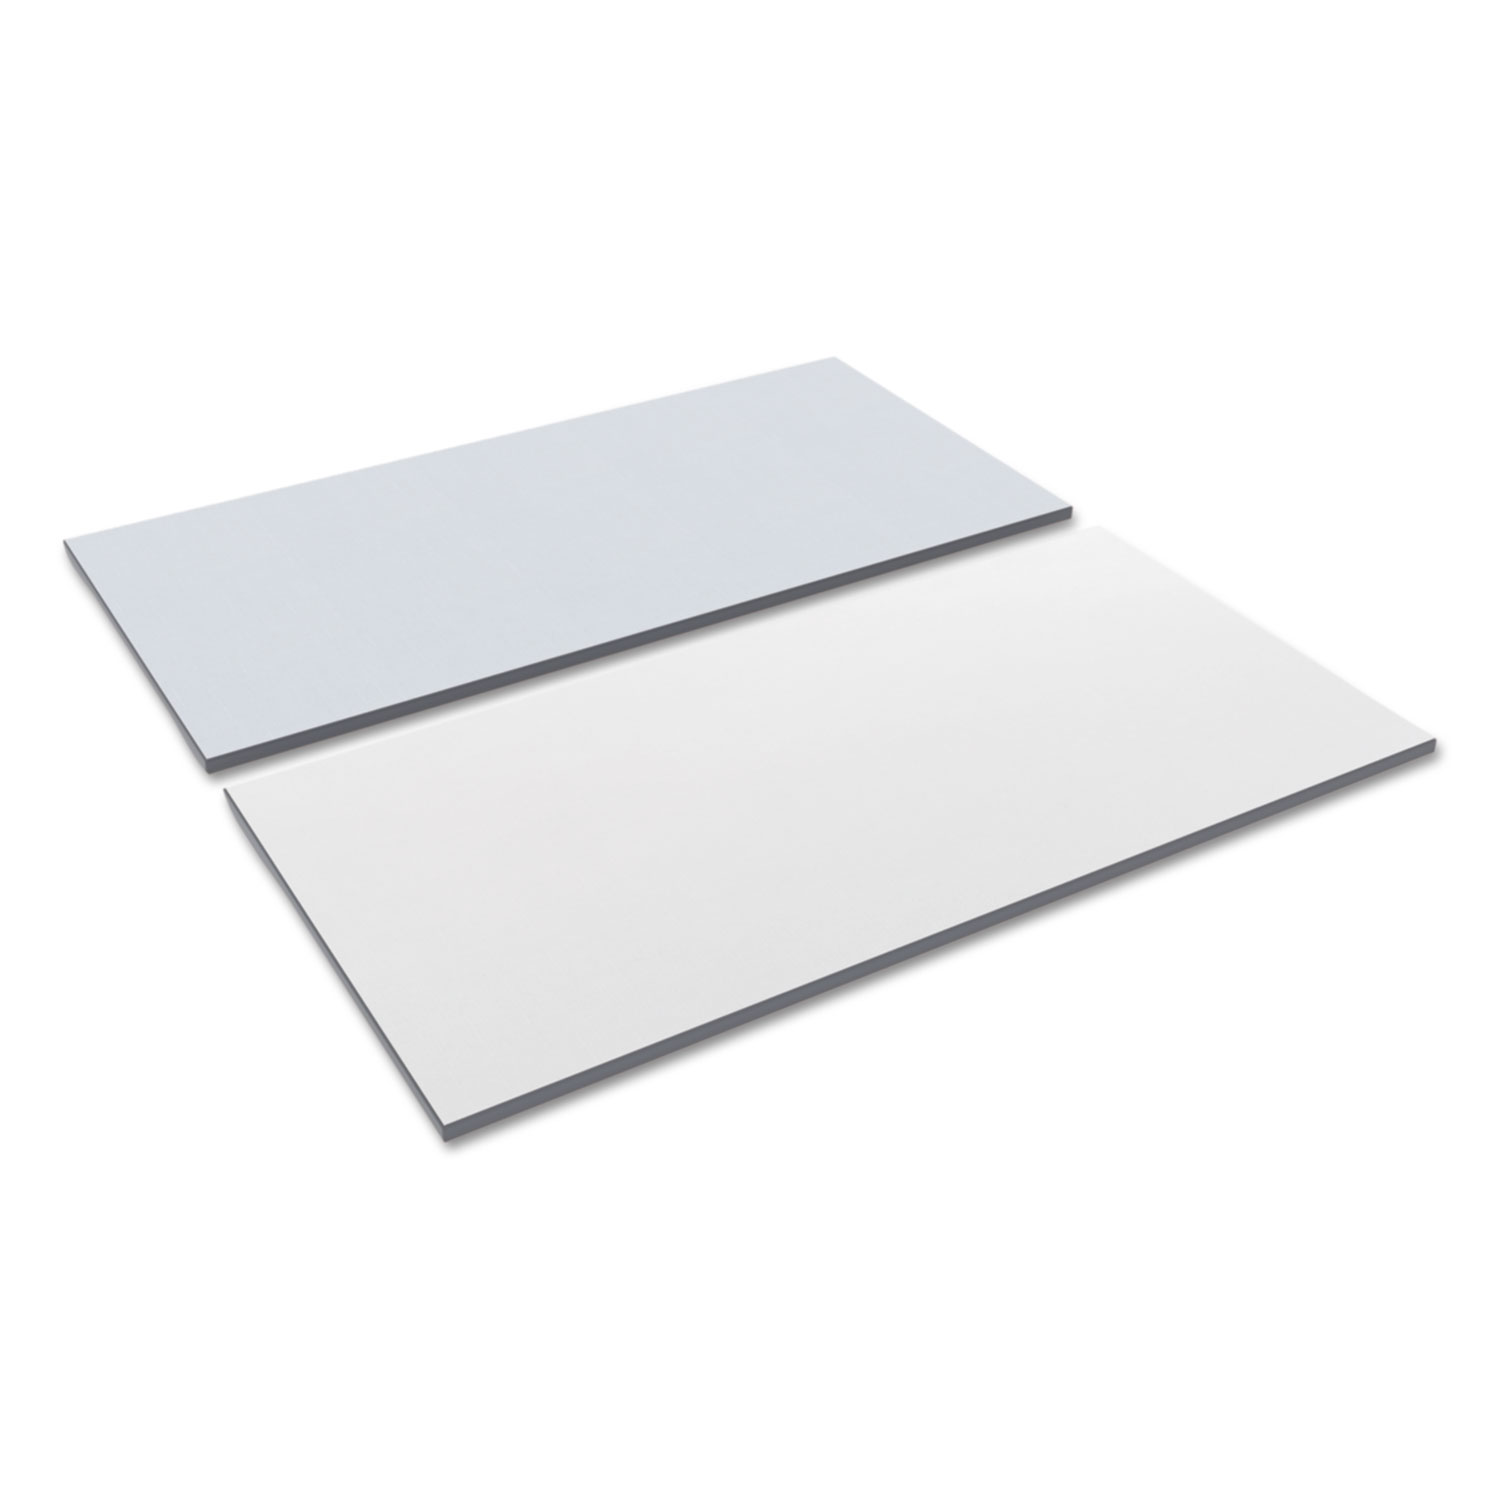  Alera ALETT6030WG Reversible Laminate Table Top, Rectangular, 59 3/8w x 29 1/2d, White/Gray (ALETT6030WG) 